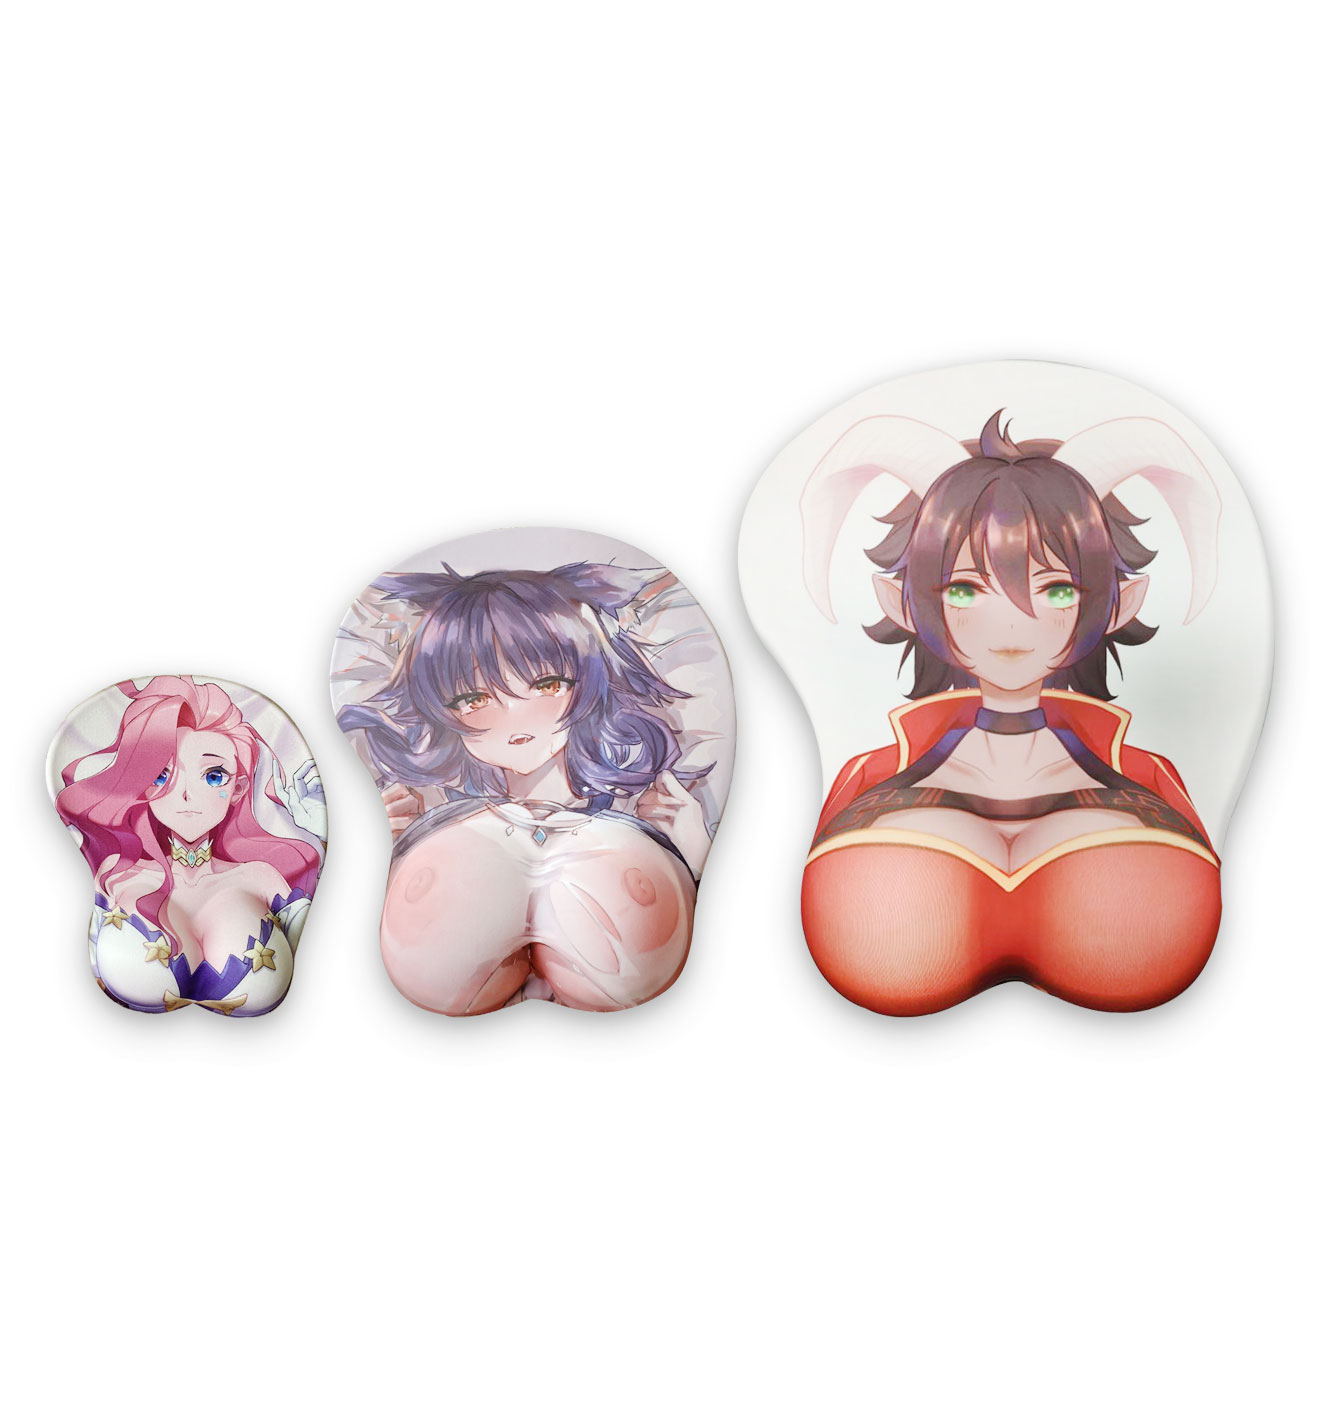 goddess life size oppai mousepad 6382 - Anime Mousepads